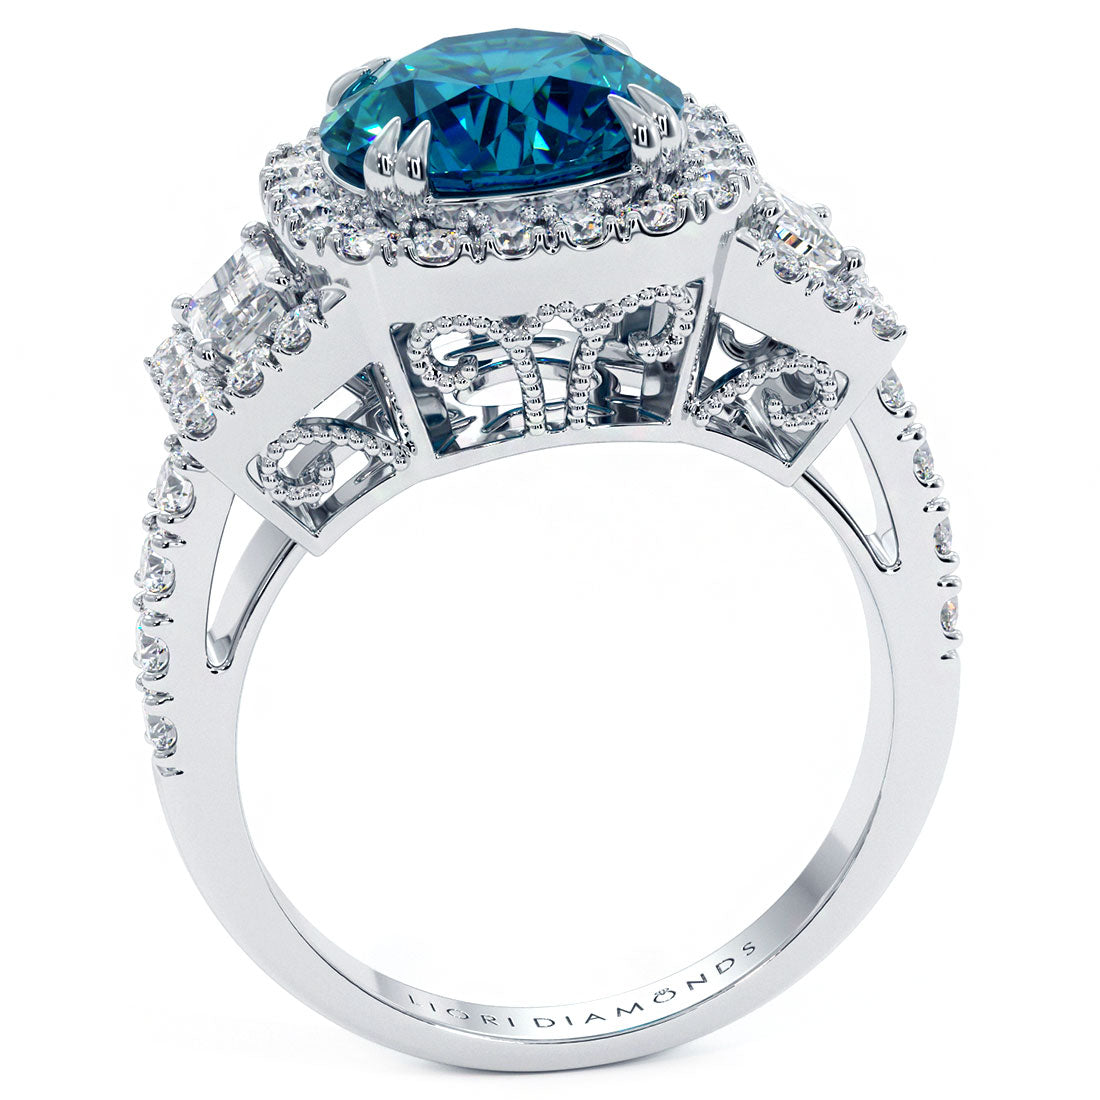 3.86 Carat Fancy Blue Diamond Engagement Ring 14k Gold Pave Halo Vintage Style